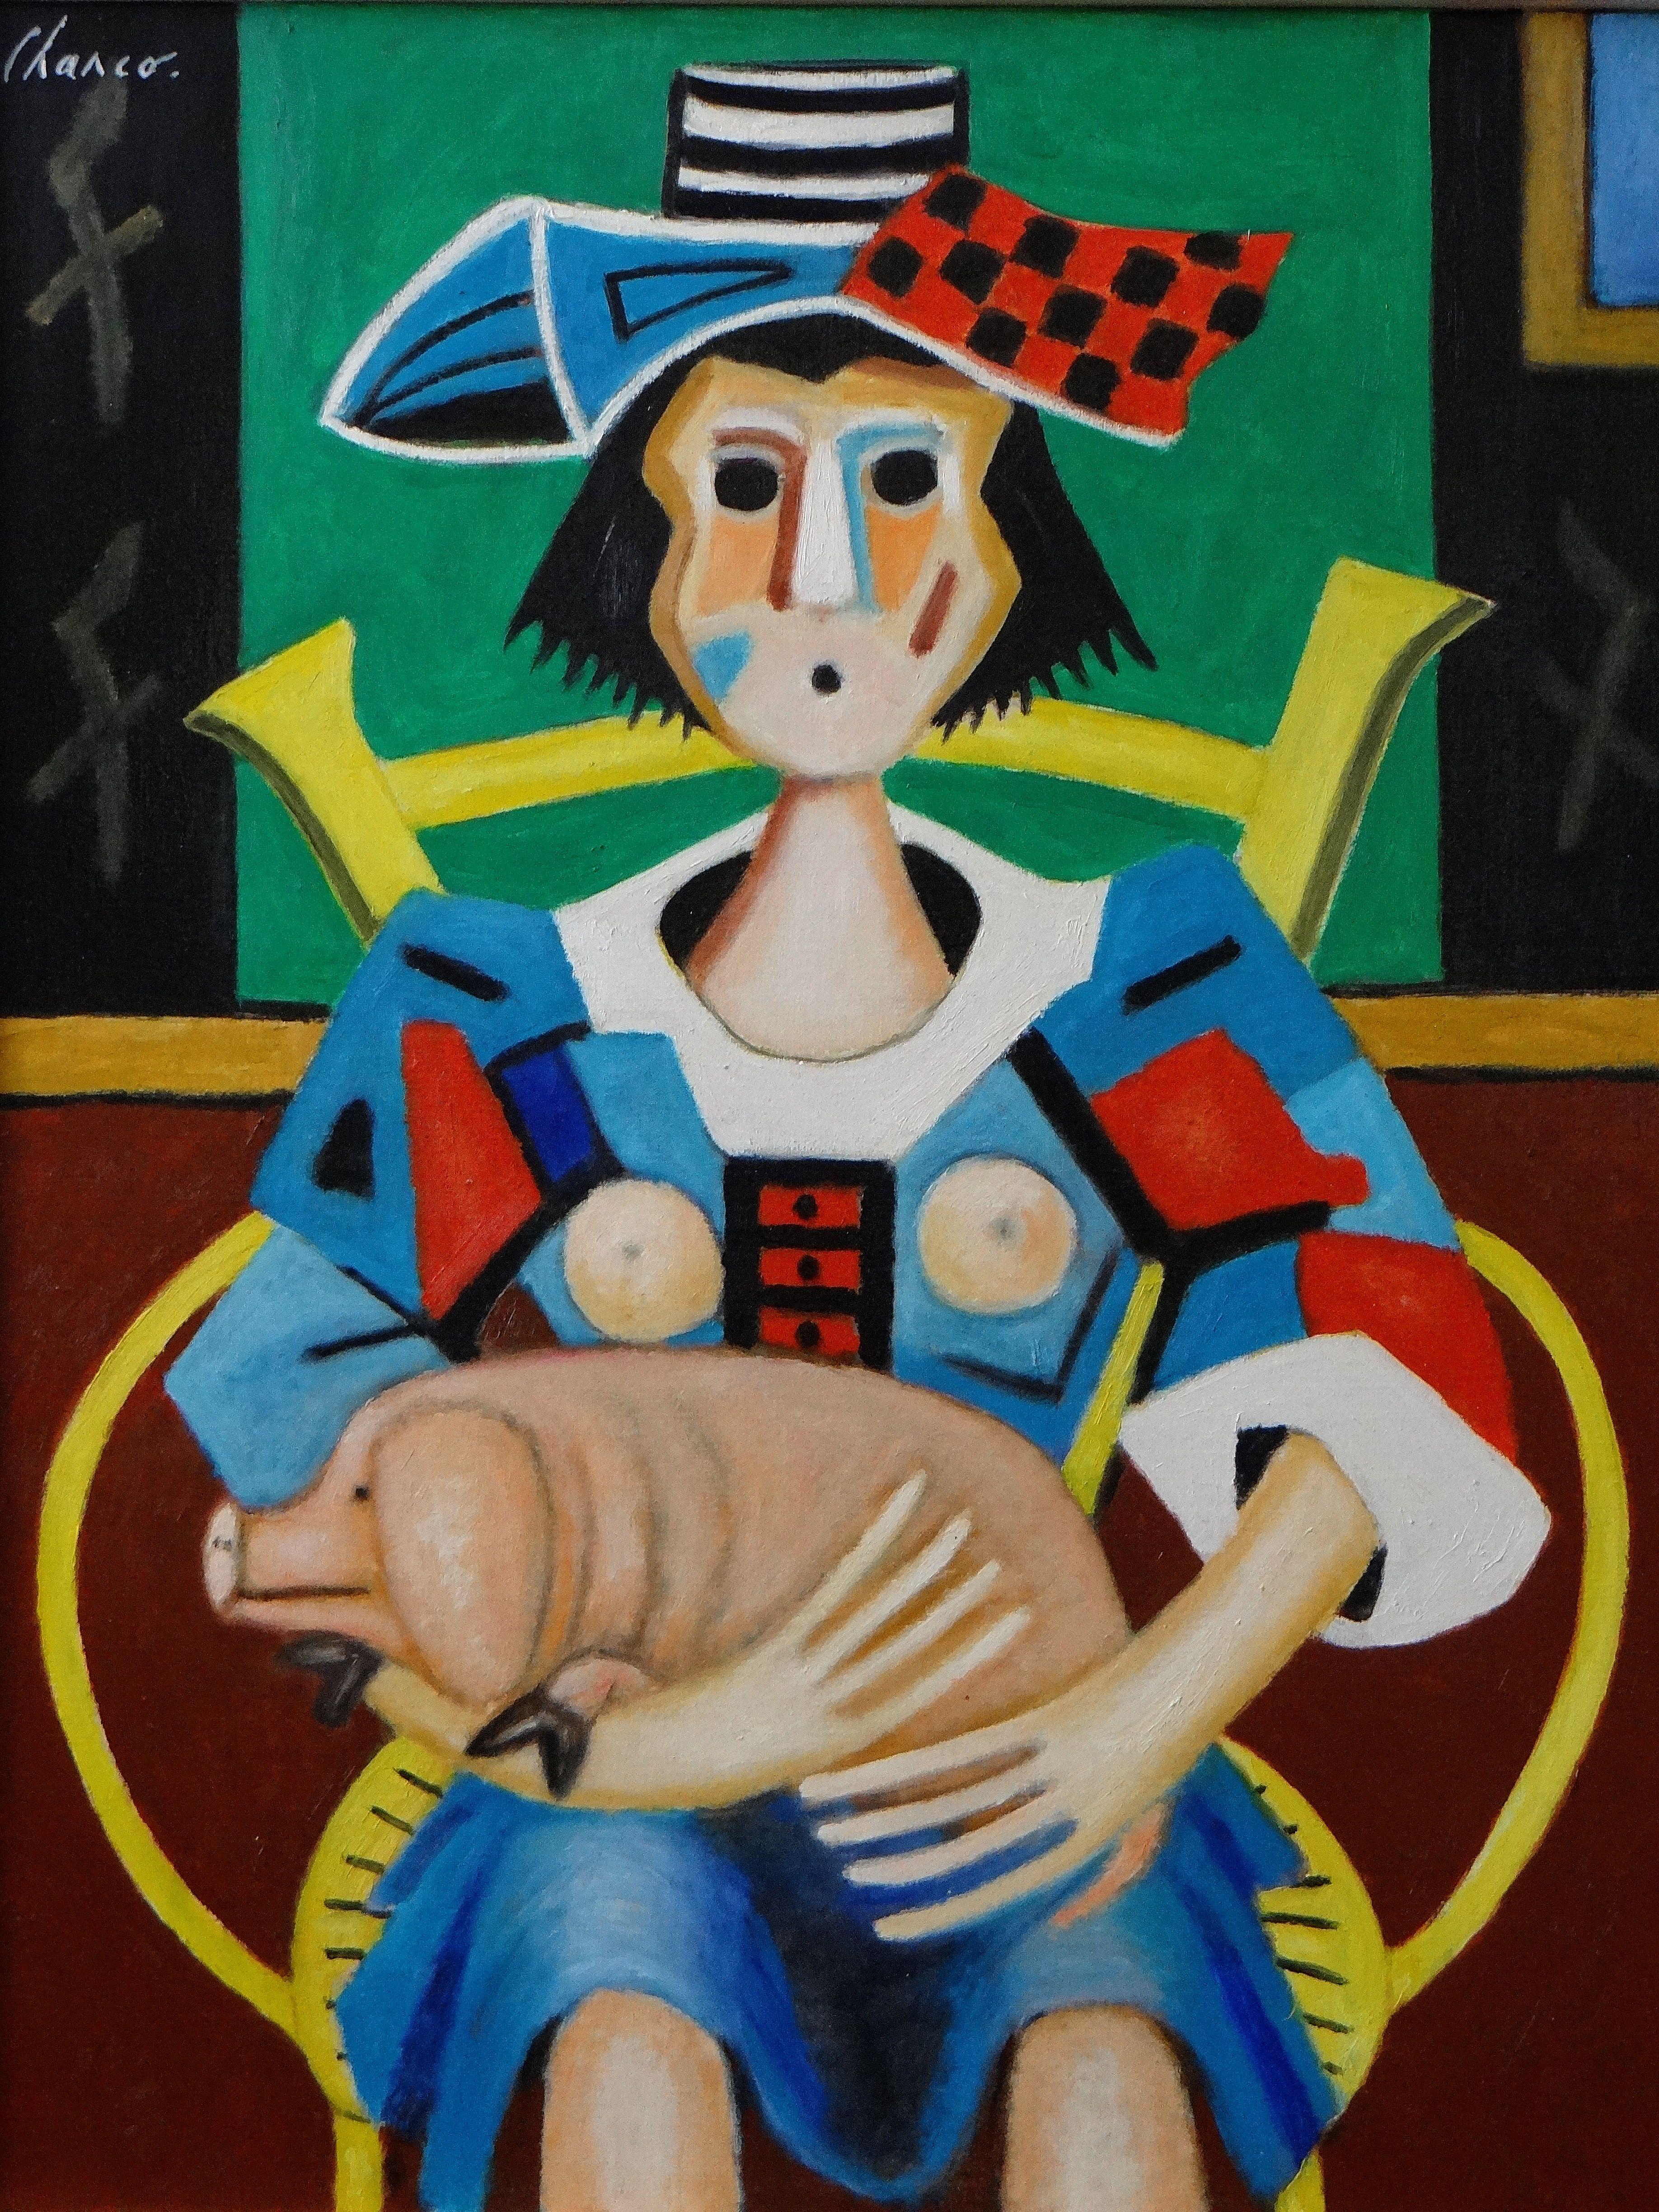 Roland Chanco Figurative Painting - Roland CHANCO (1914-2017), Painting "Piglet", 2000.